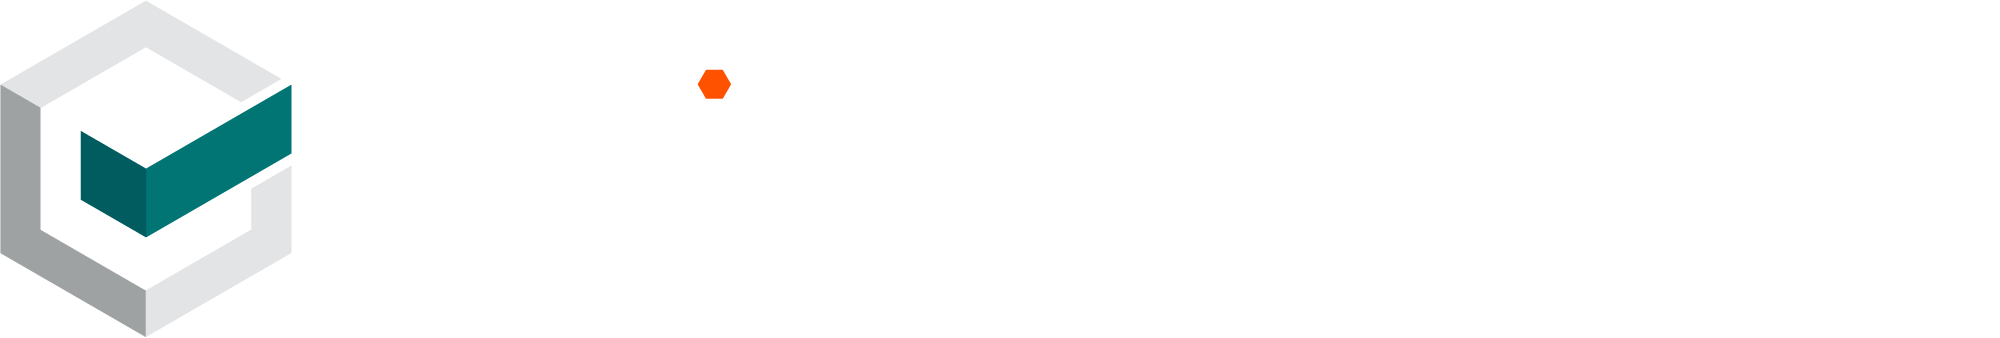 Procore Safety Qualified logo